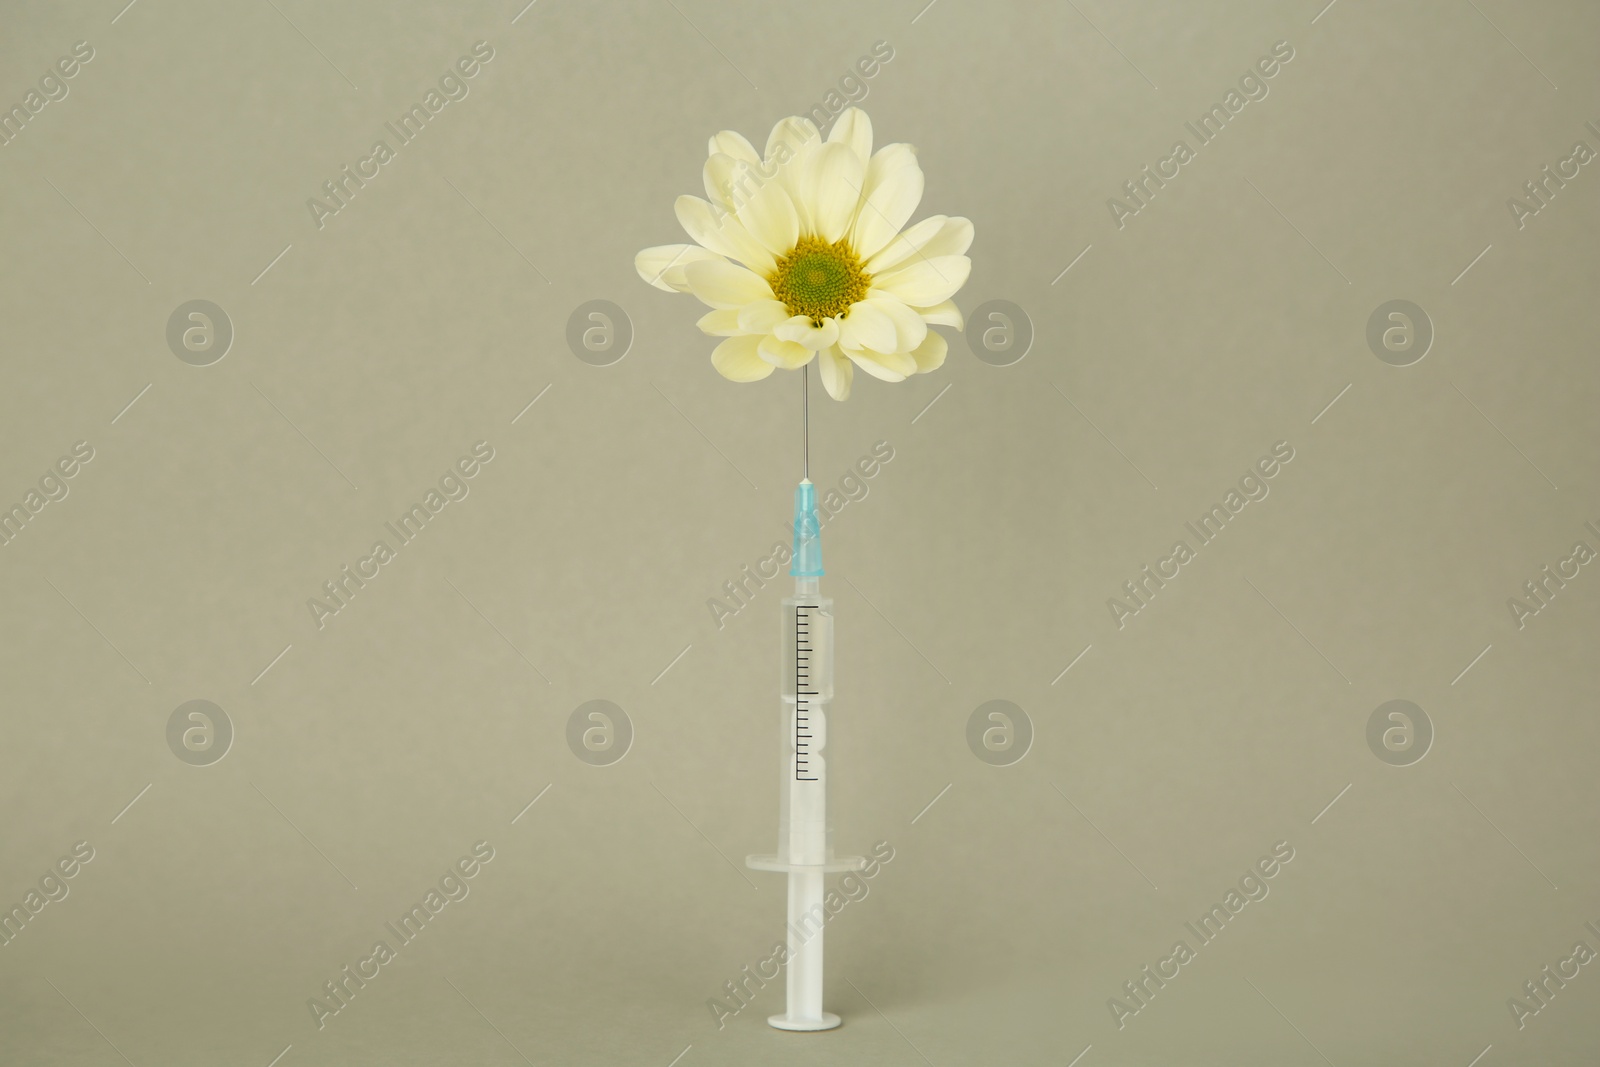 Photo of Medical syringe and chrysanthemum flower on light grey background